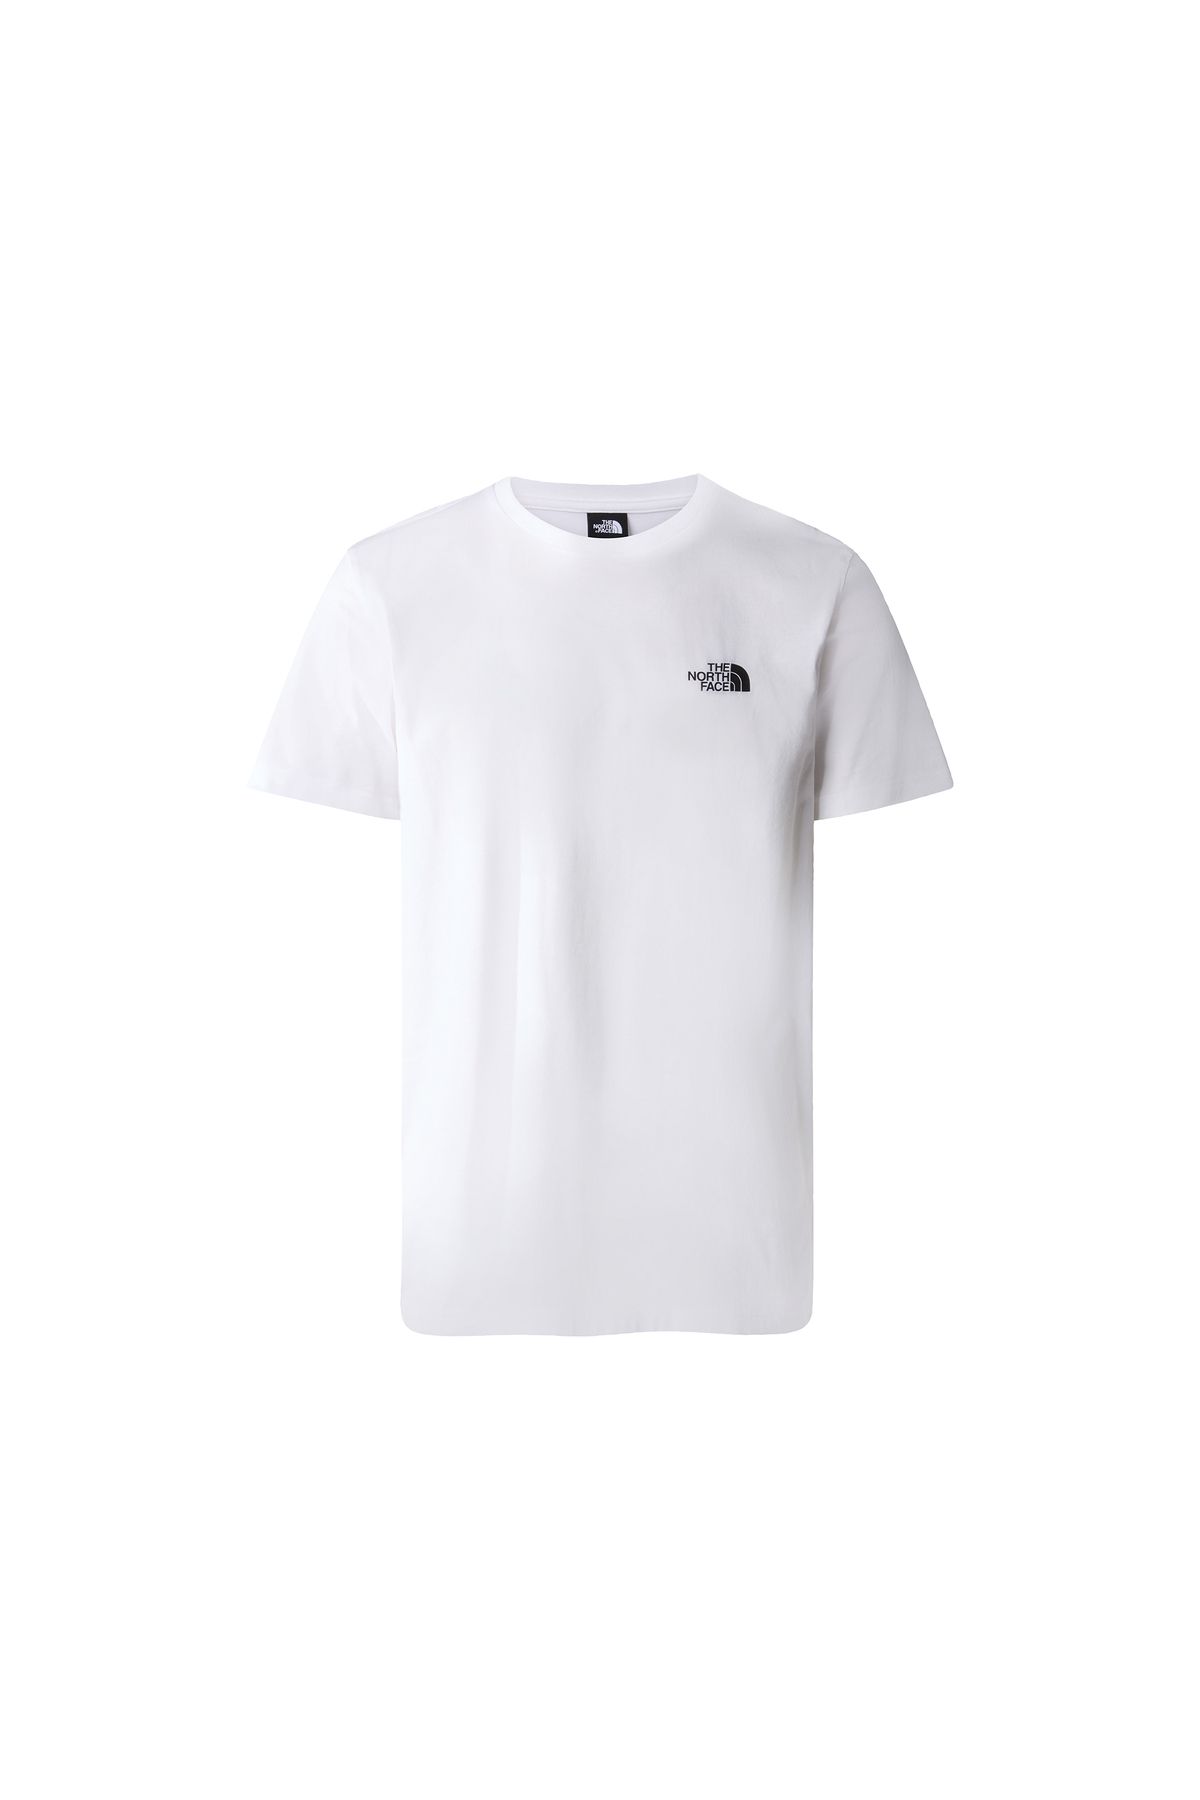 The North Face M S/S Simple Dome Tee Tişört Erkek Günlük T-shirt